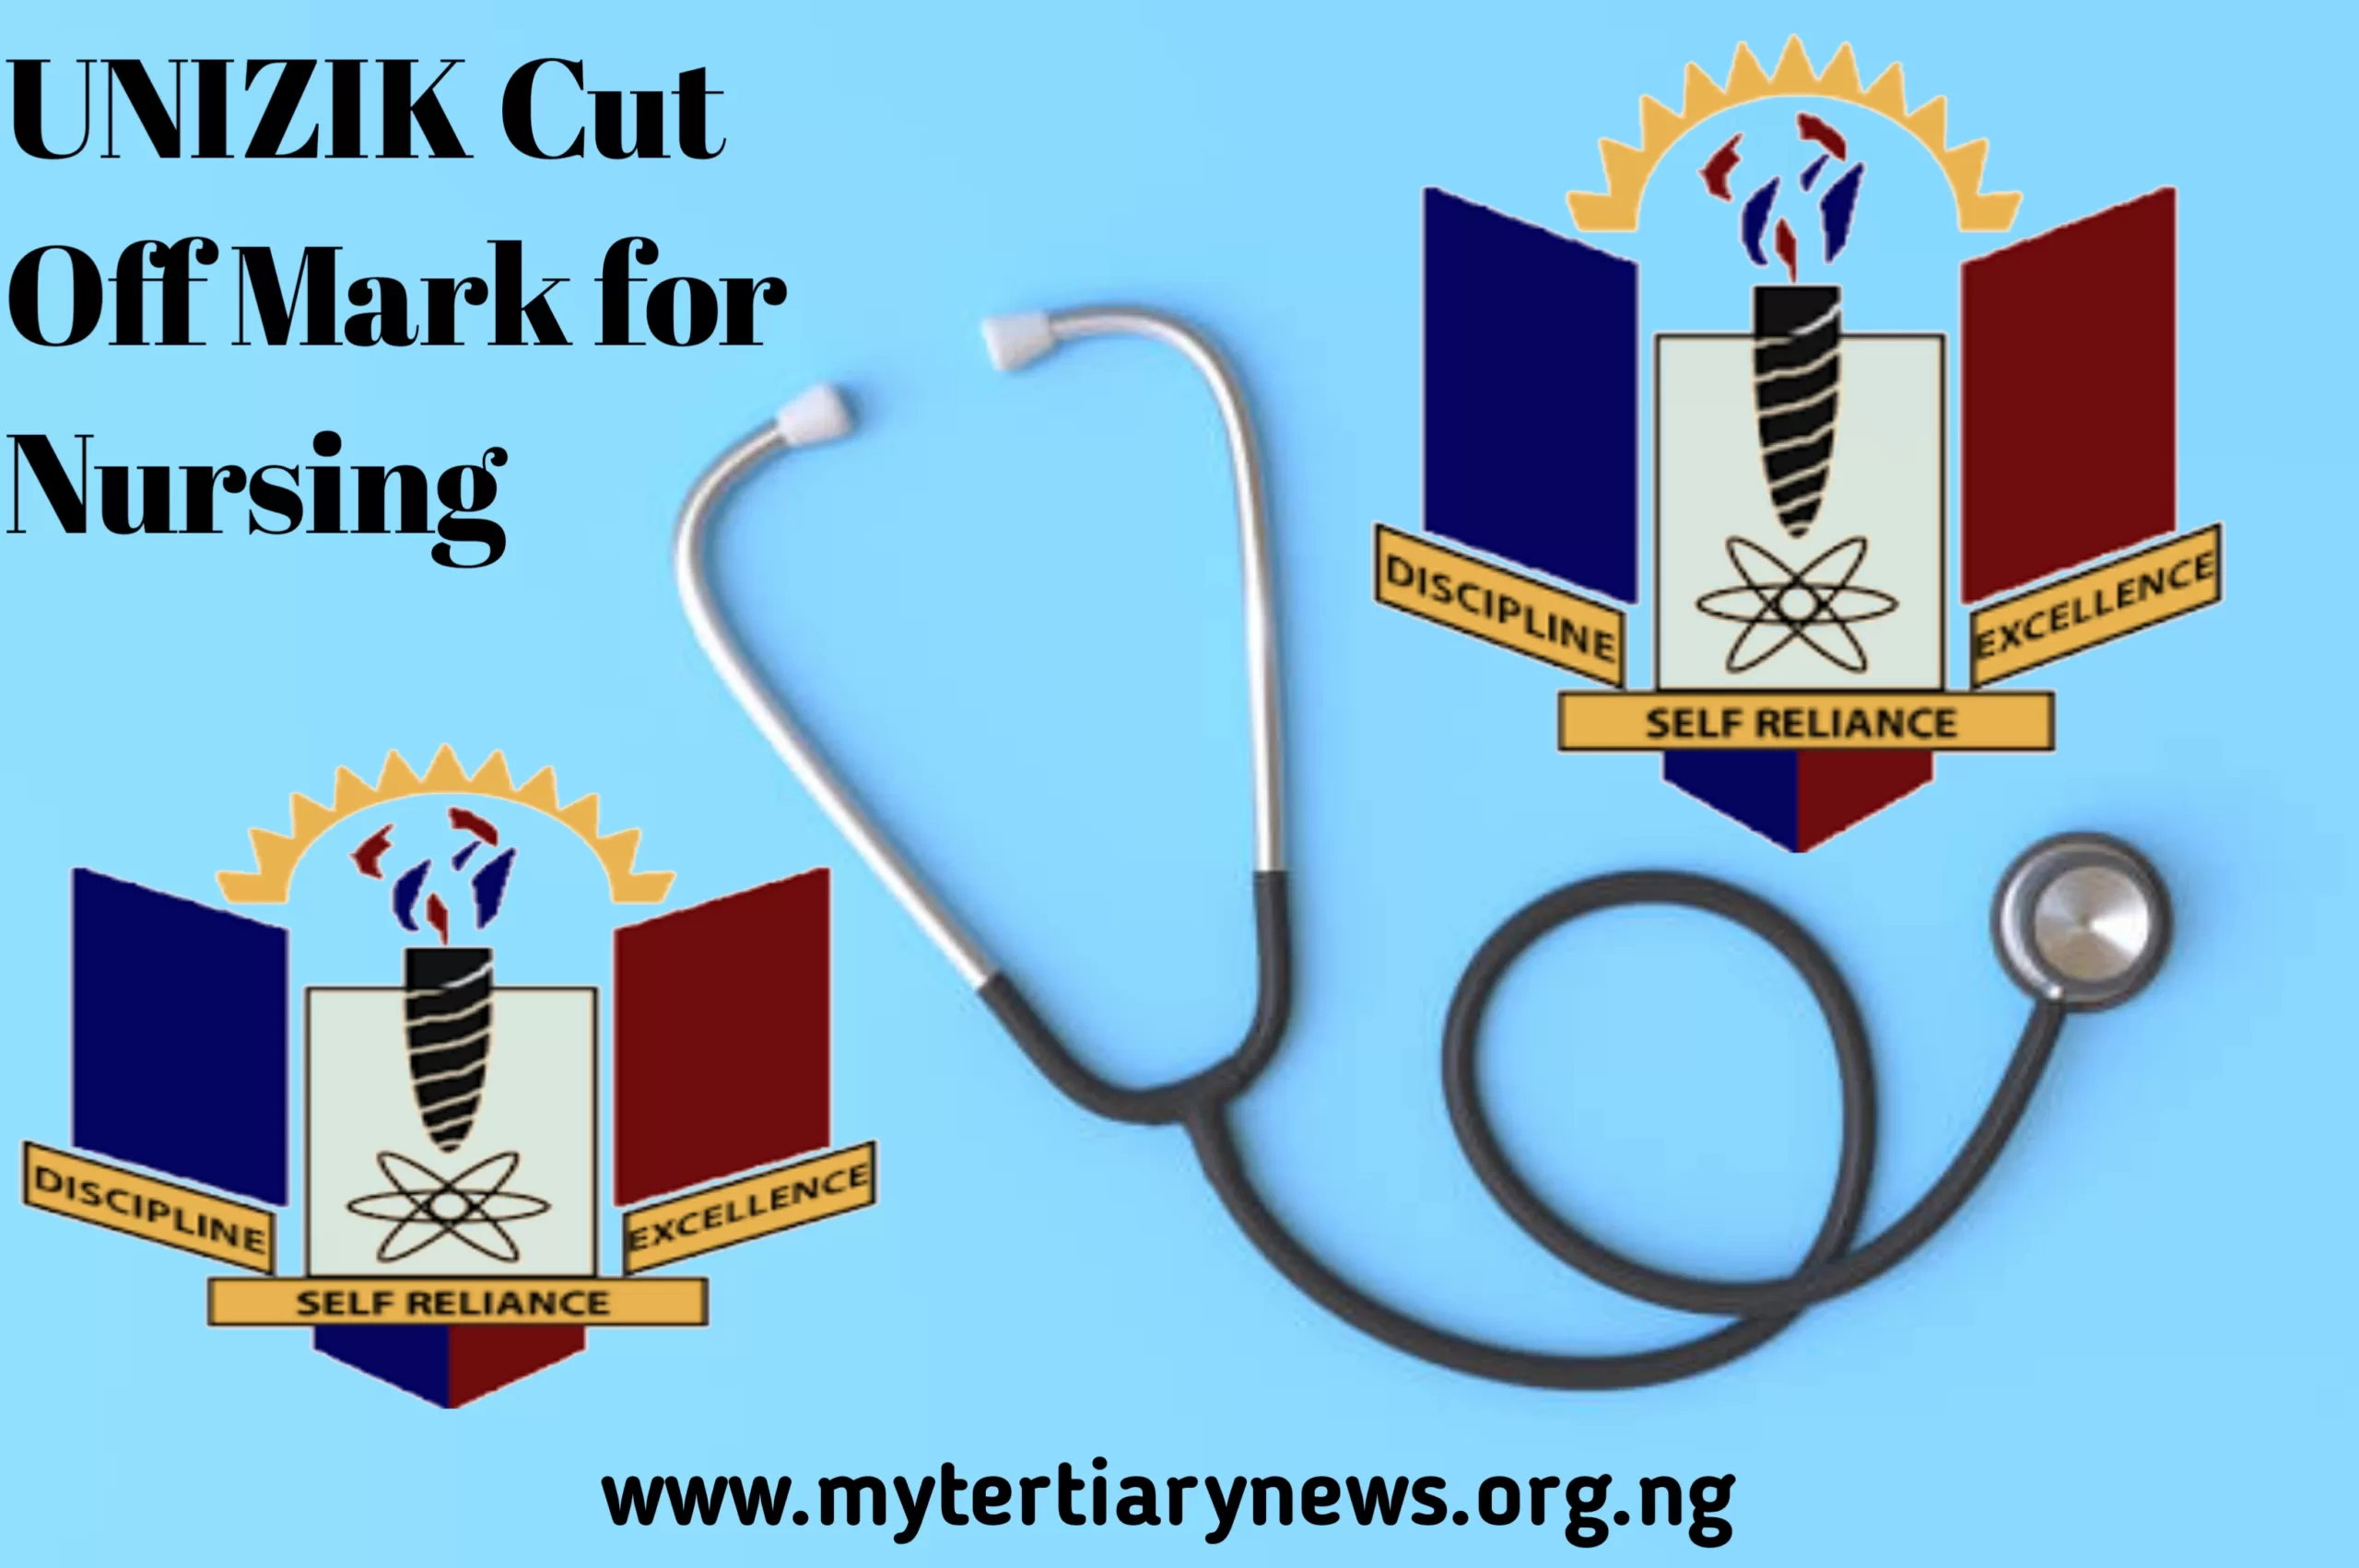 UNIZIK Image || UNIZIK Cut Off Mark for Nursing